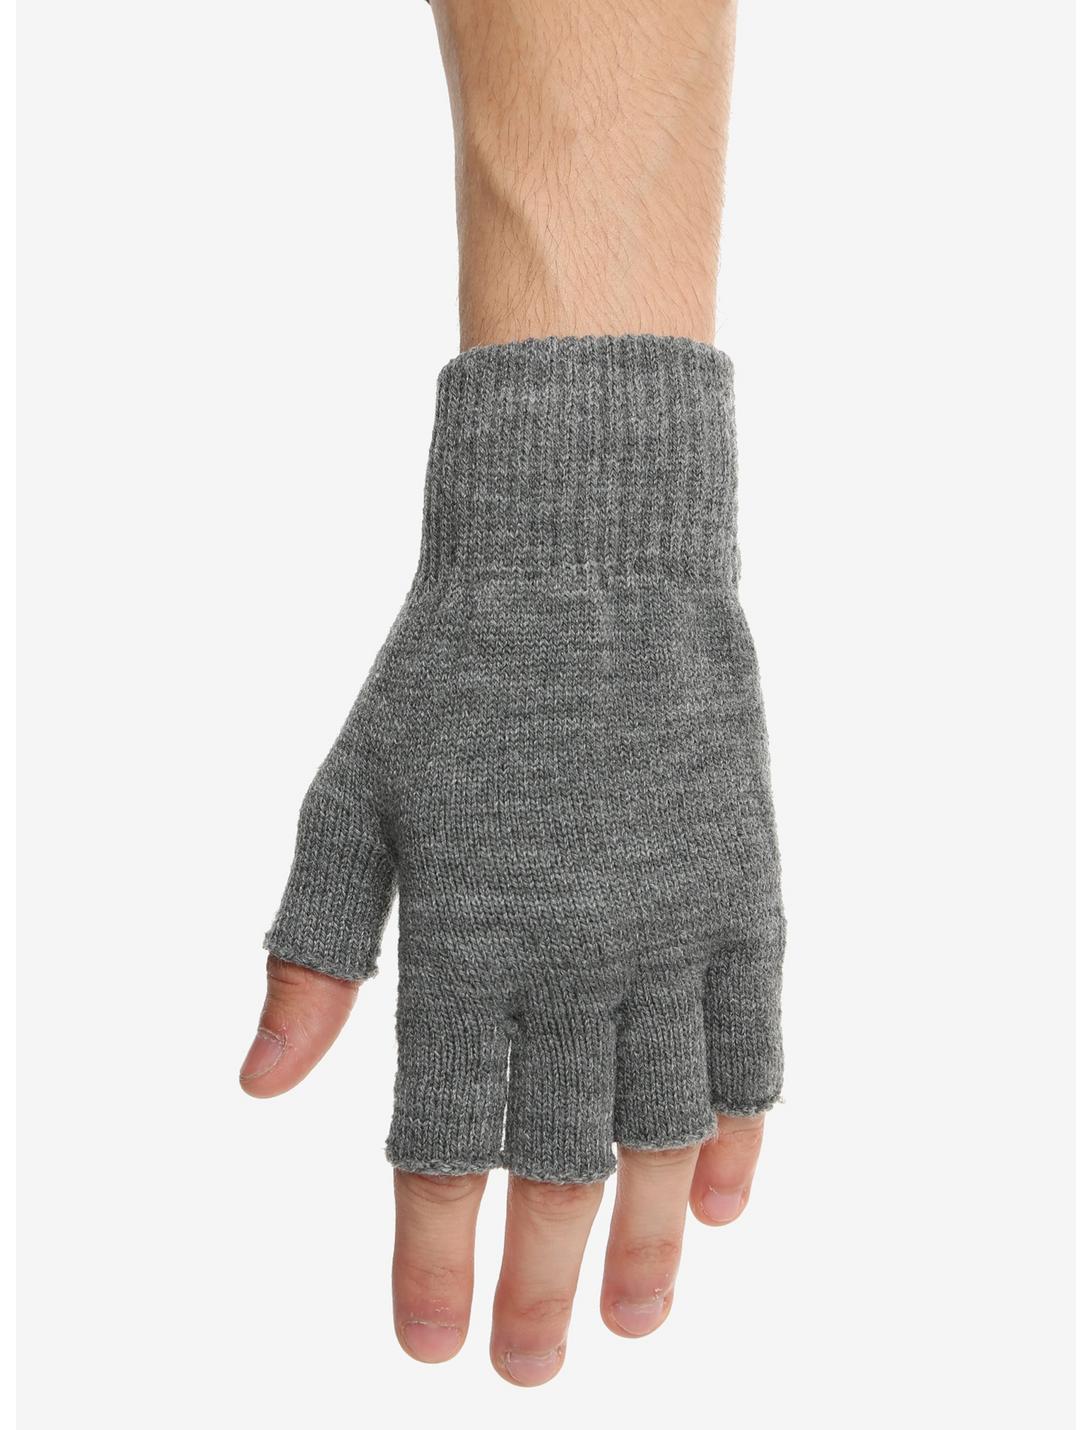 Grey Marled Fingerless Gloves, , hi-res